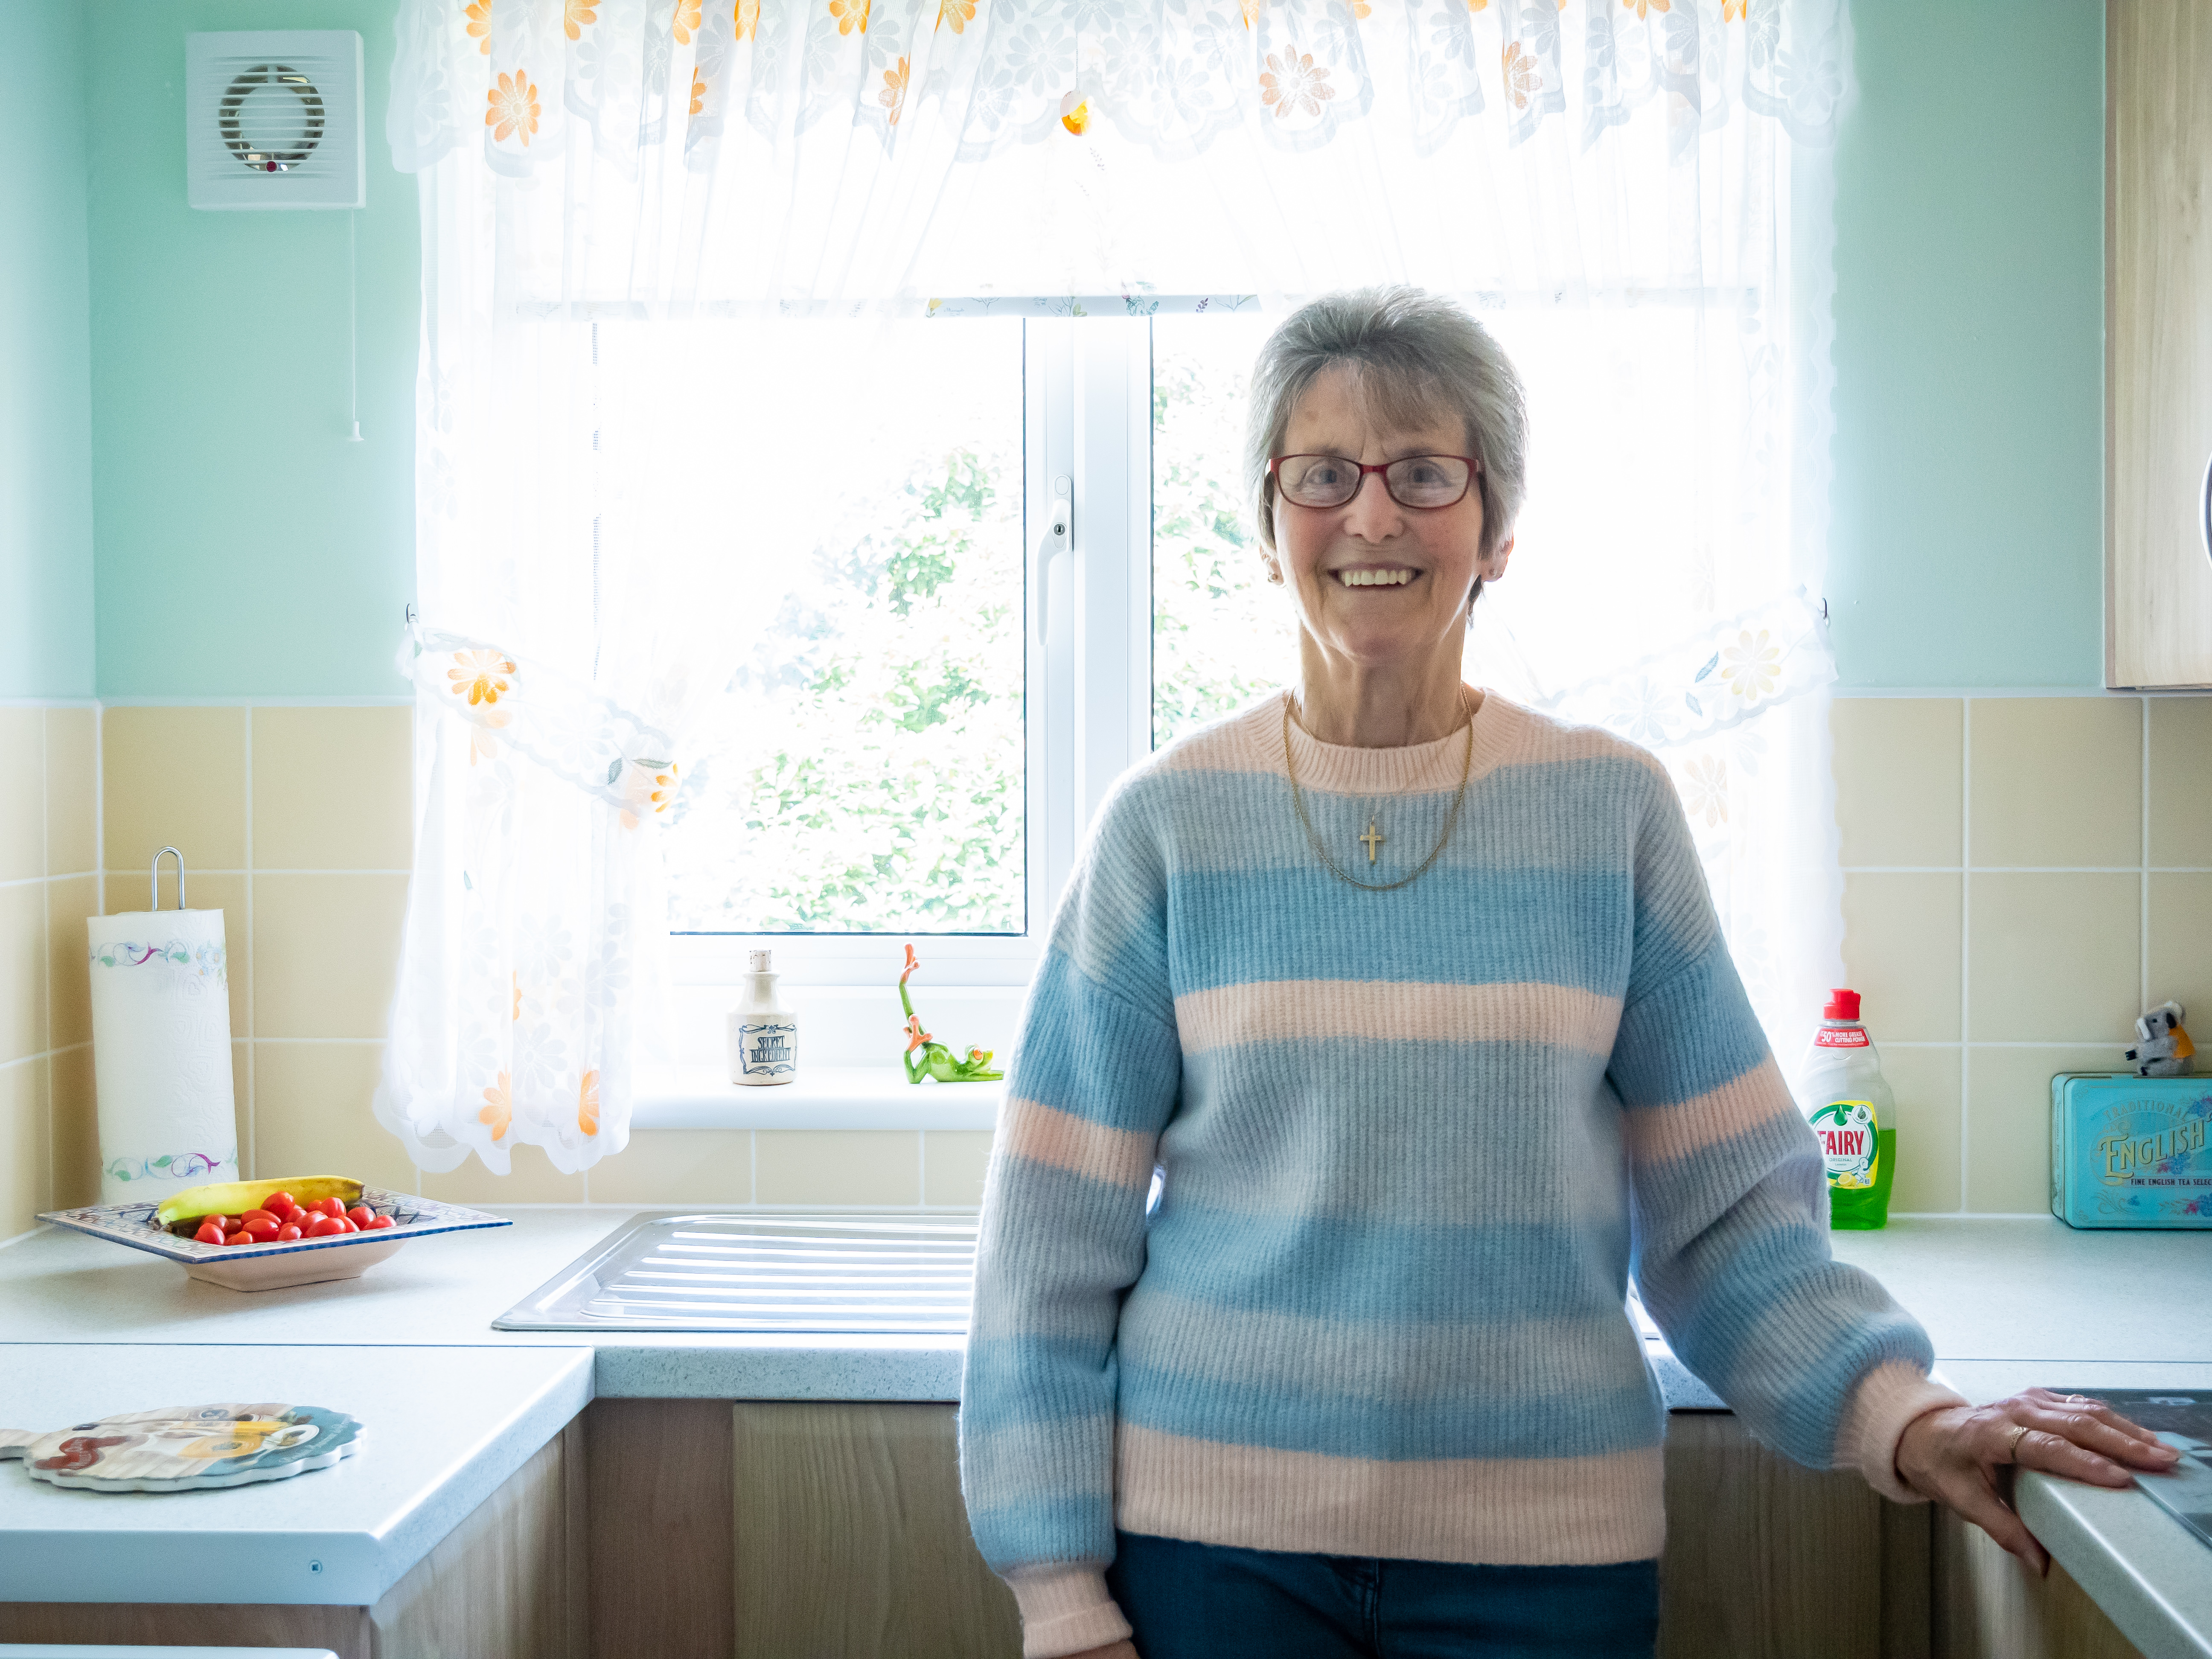 Elderly customer stood smiling in her kitchen